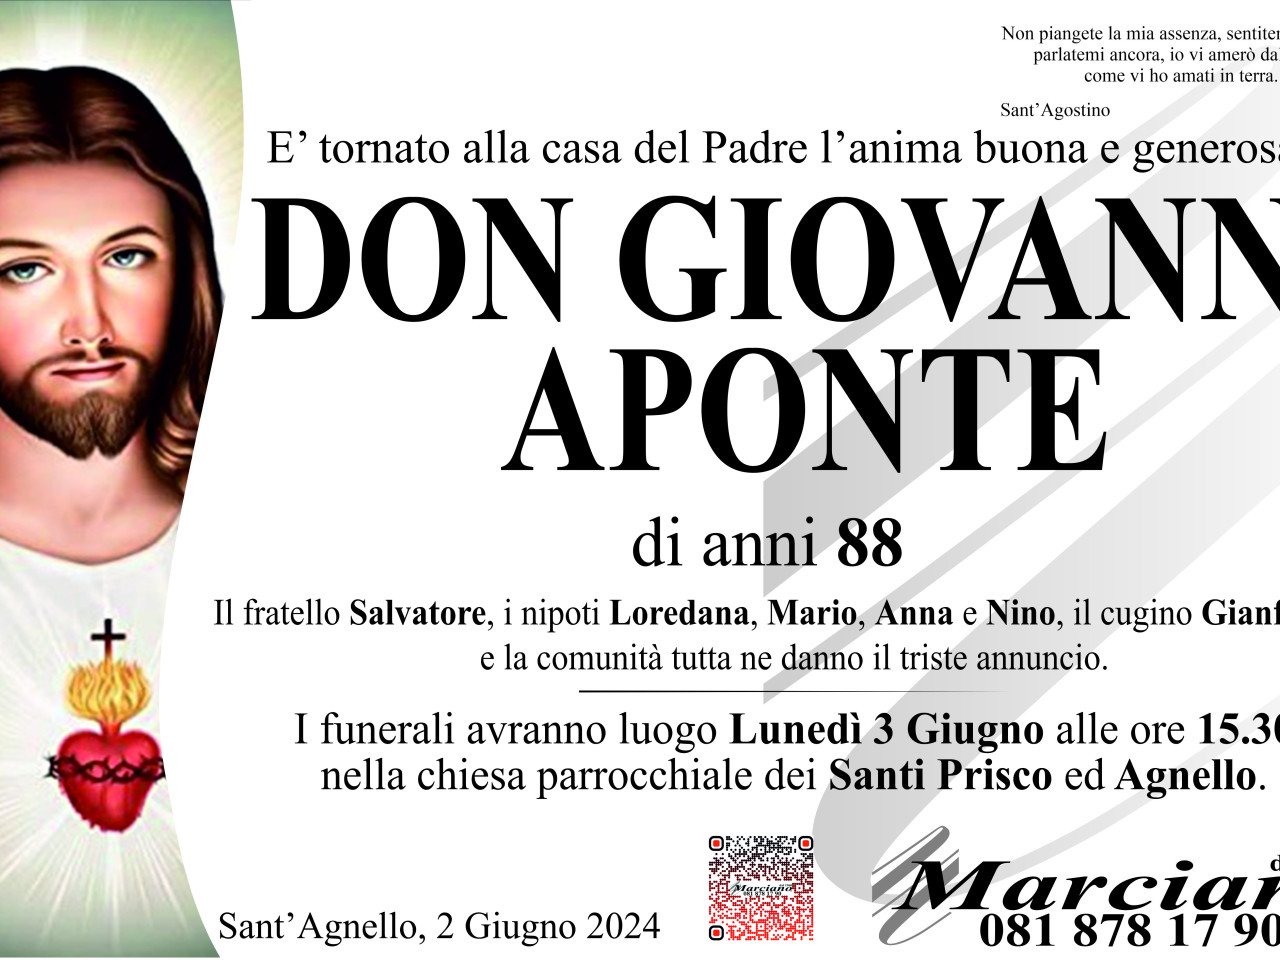 Don Giovanni Aponte